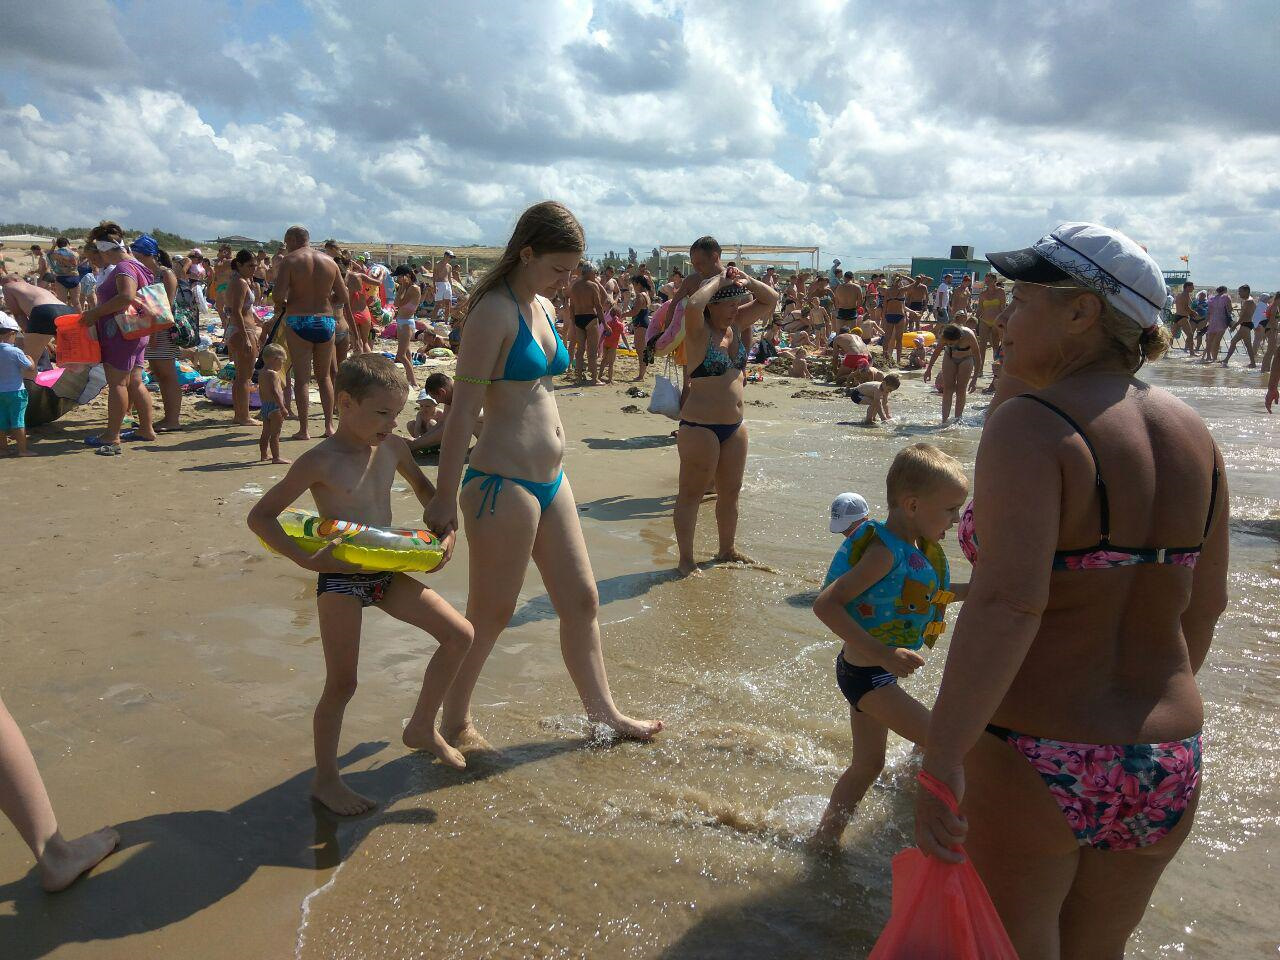 Дети на пляже в анапе